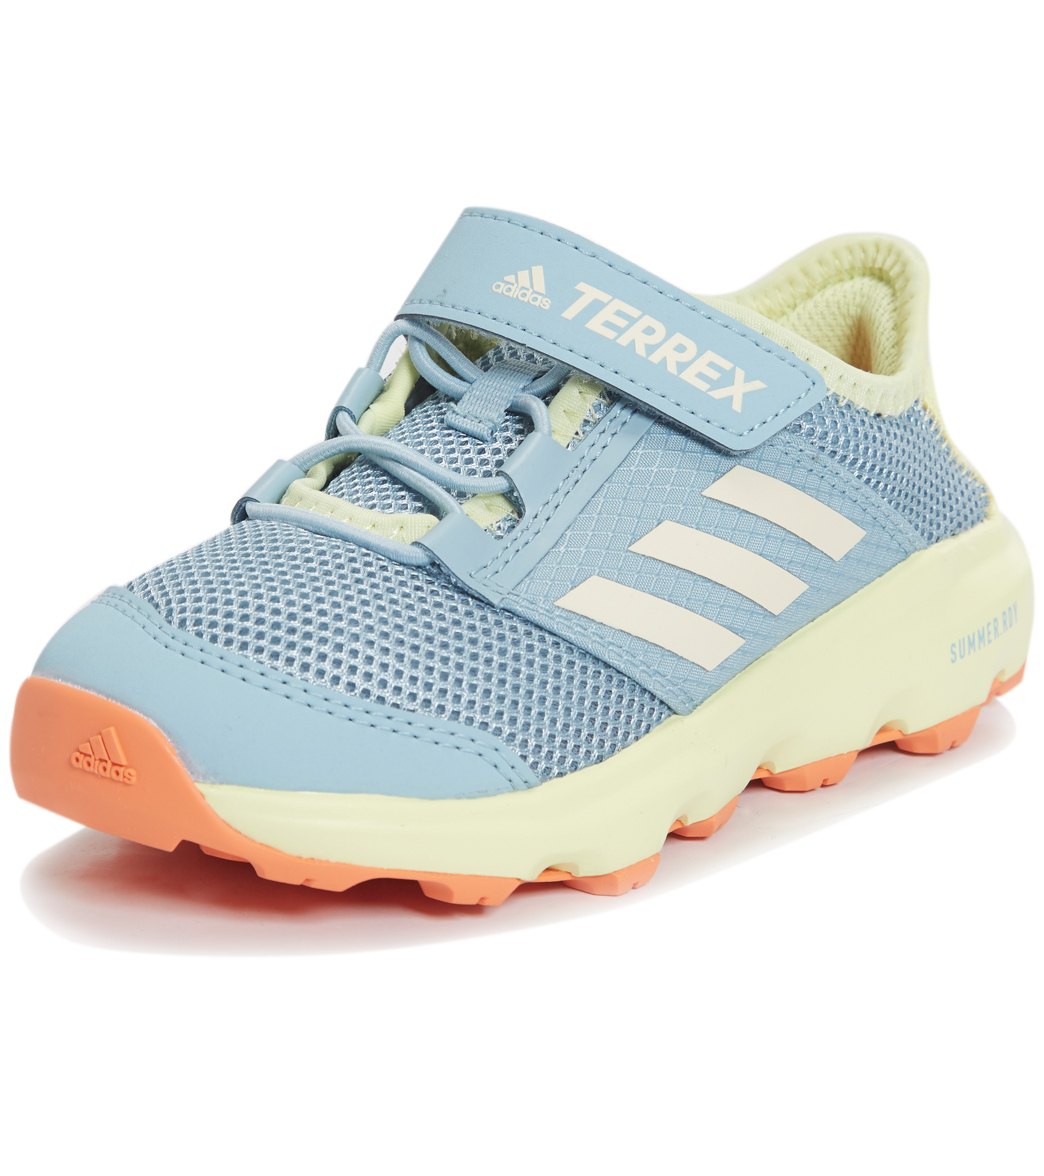 adidas toddler water shoes